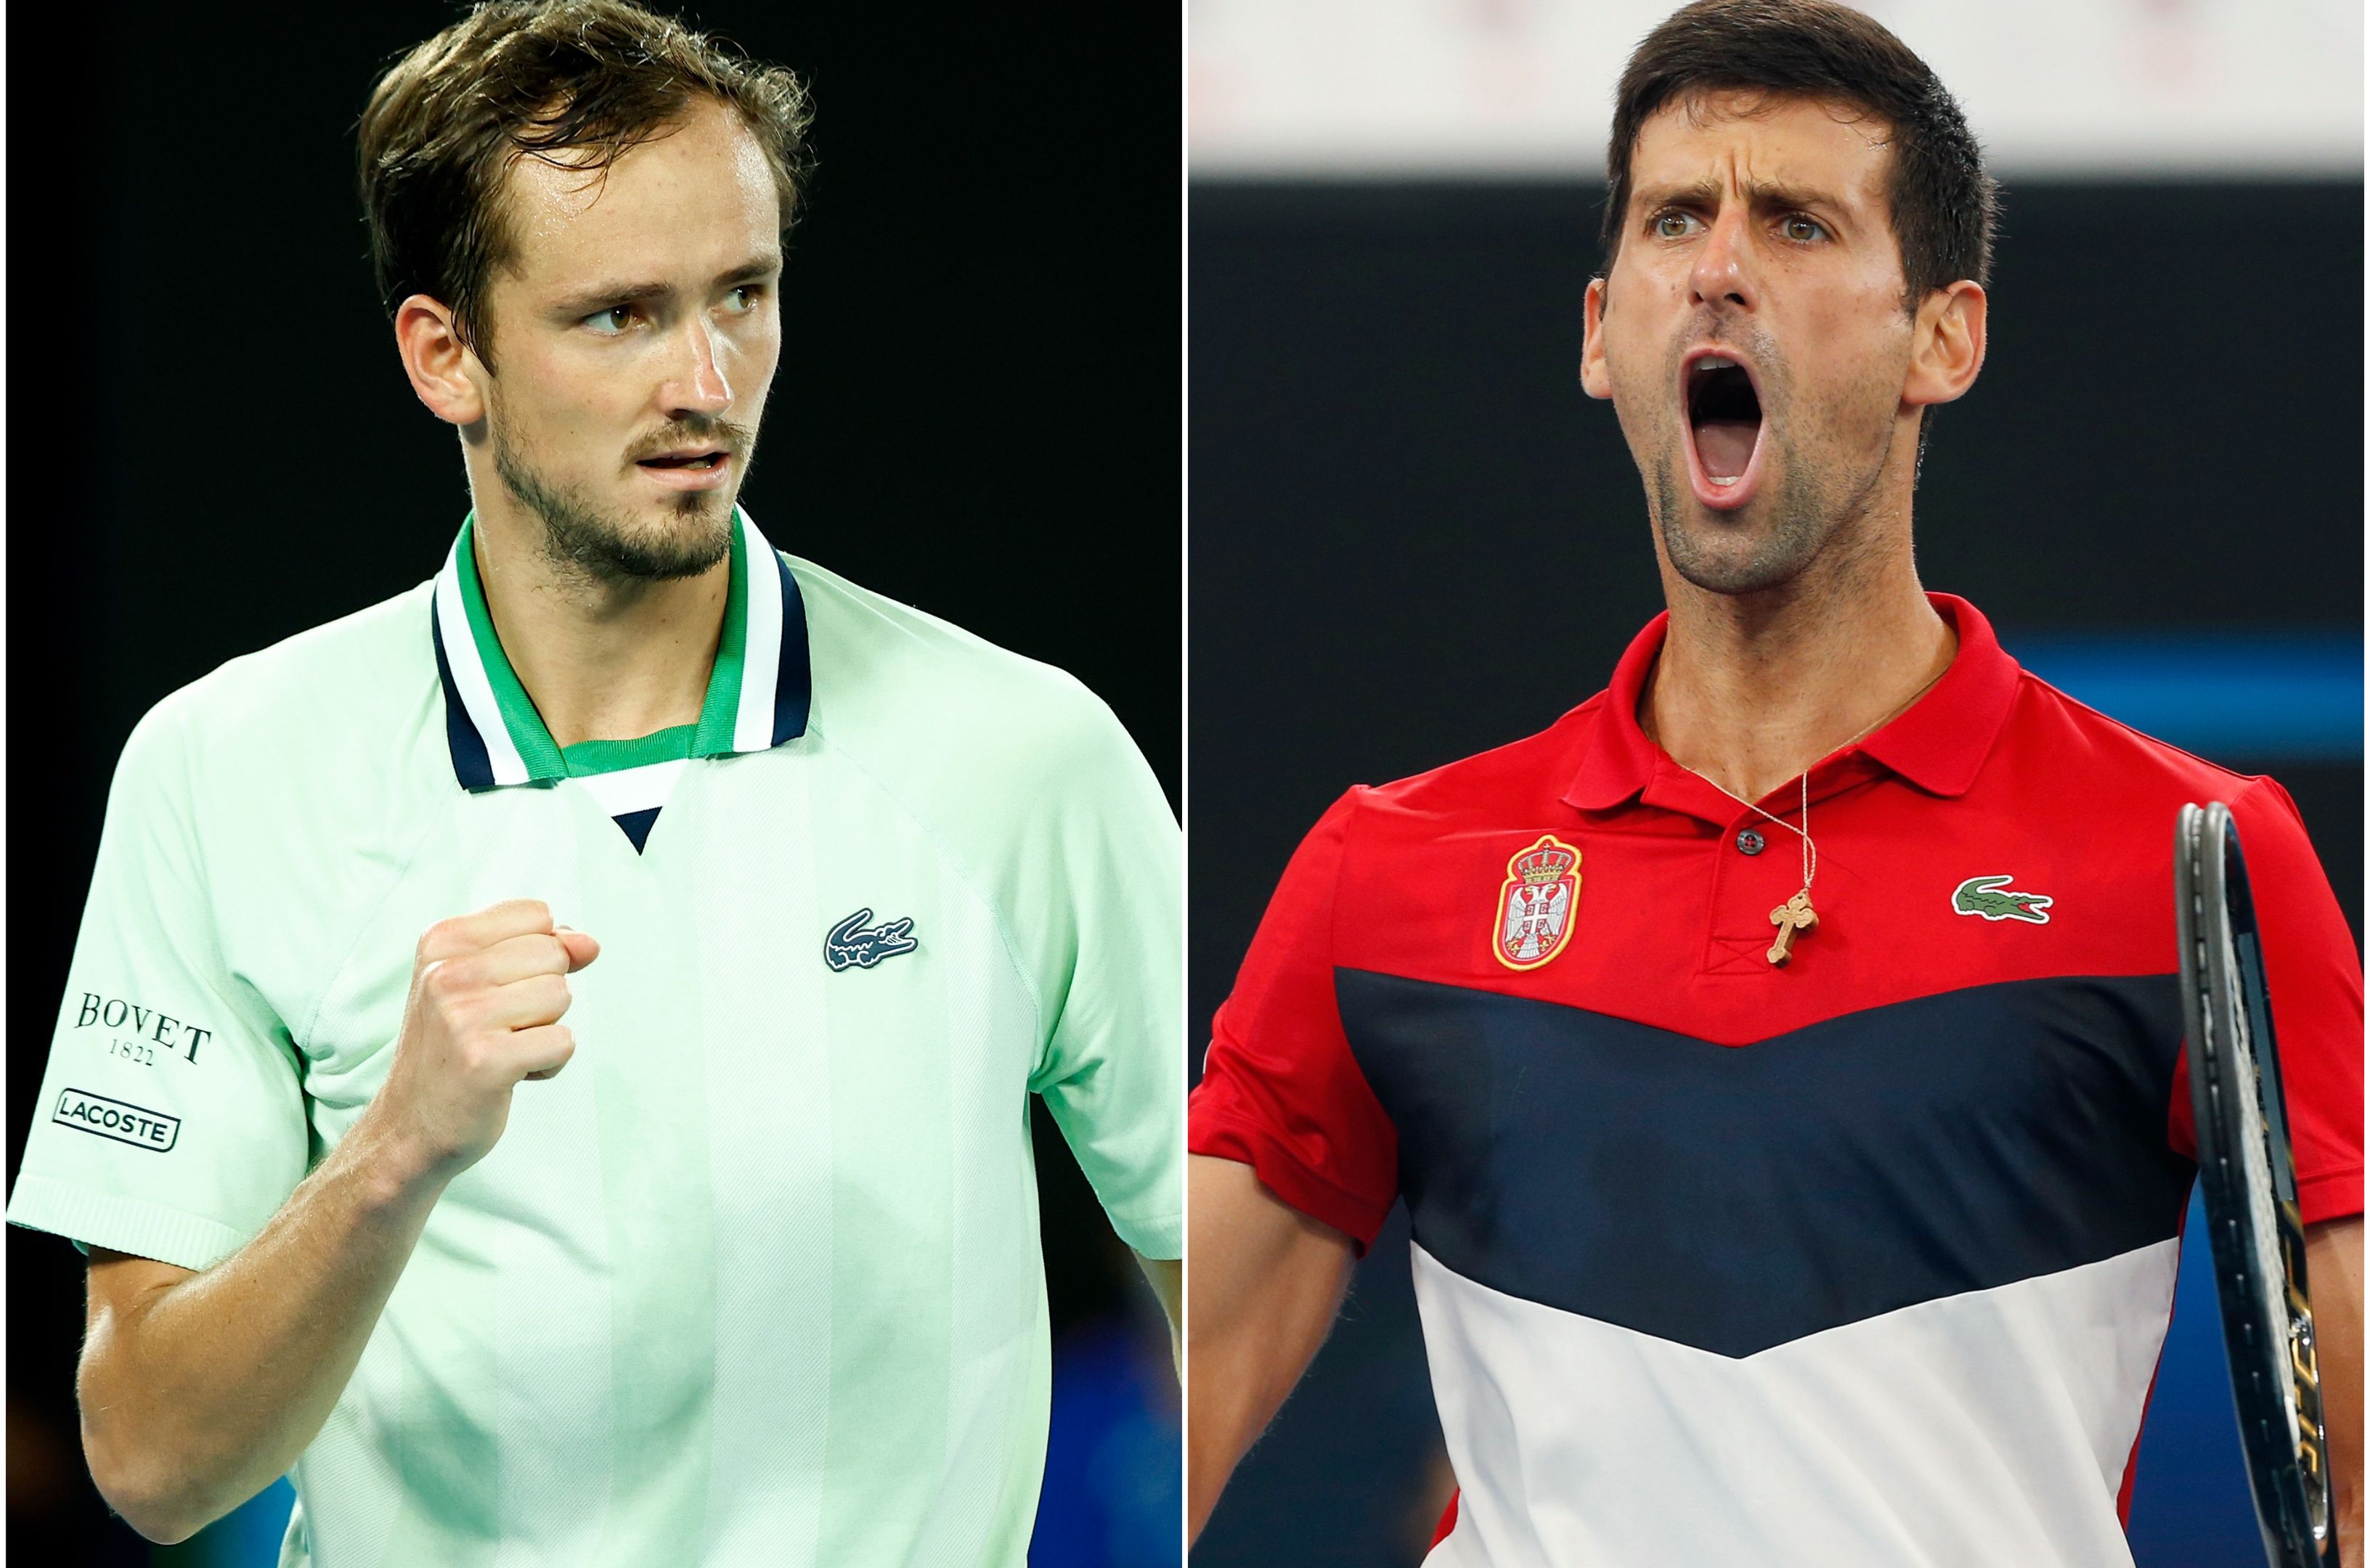 EXCLUSIVE: The Novak Djokovic trait that can lift Daniil Medvedev to victory in Australian Open final